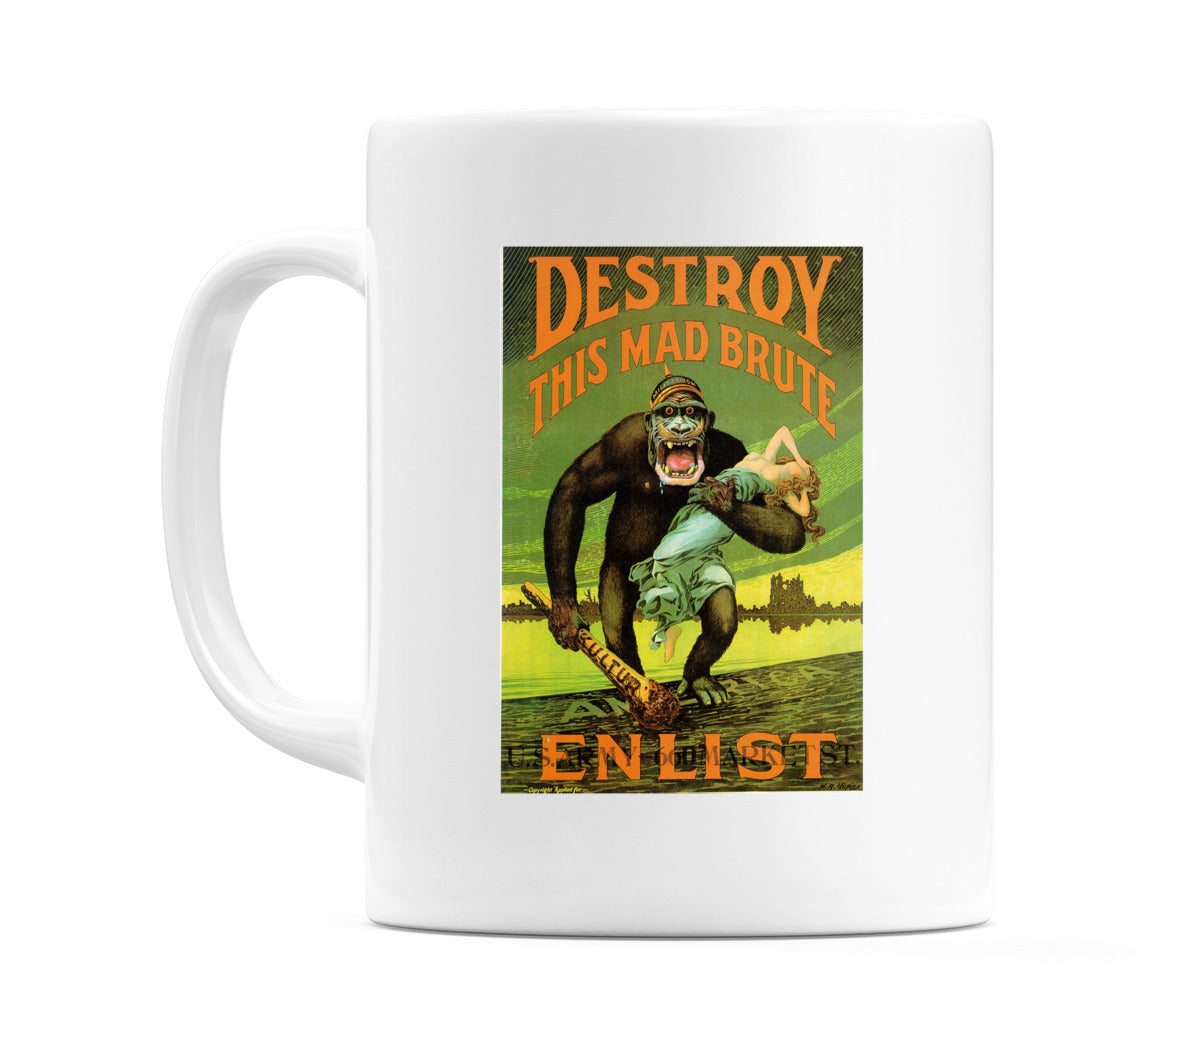 Destroy This Mad Brute' - US Poster Mug